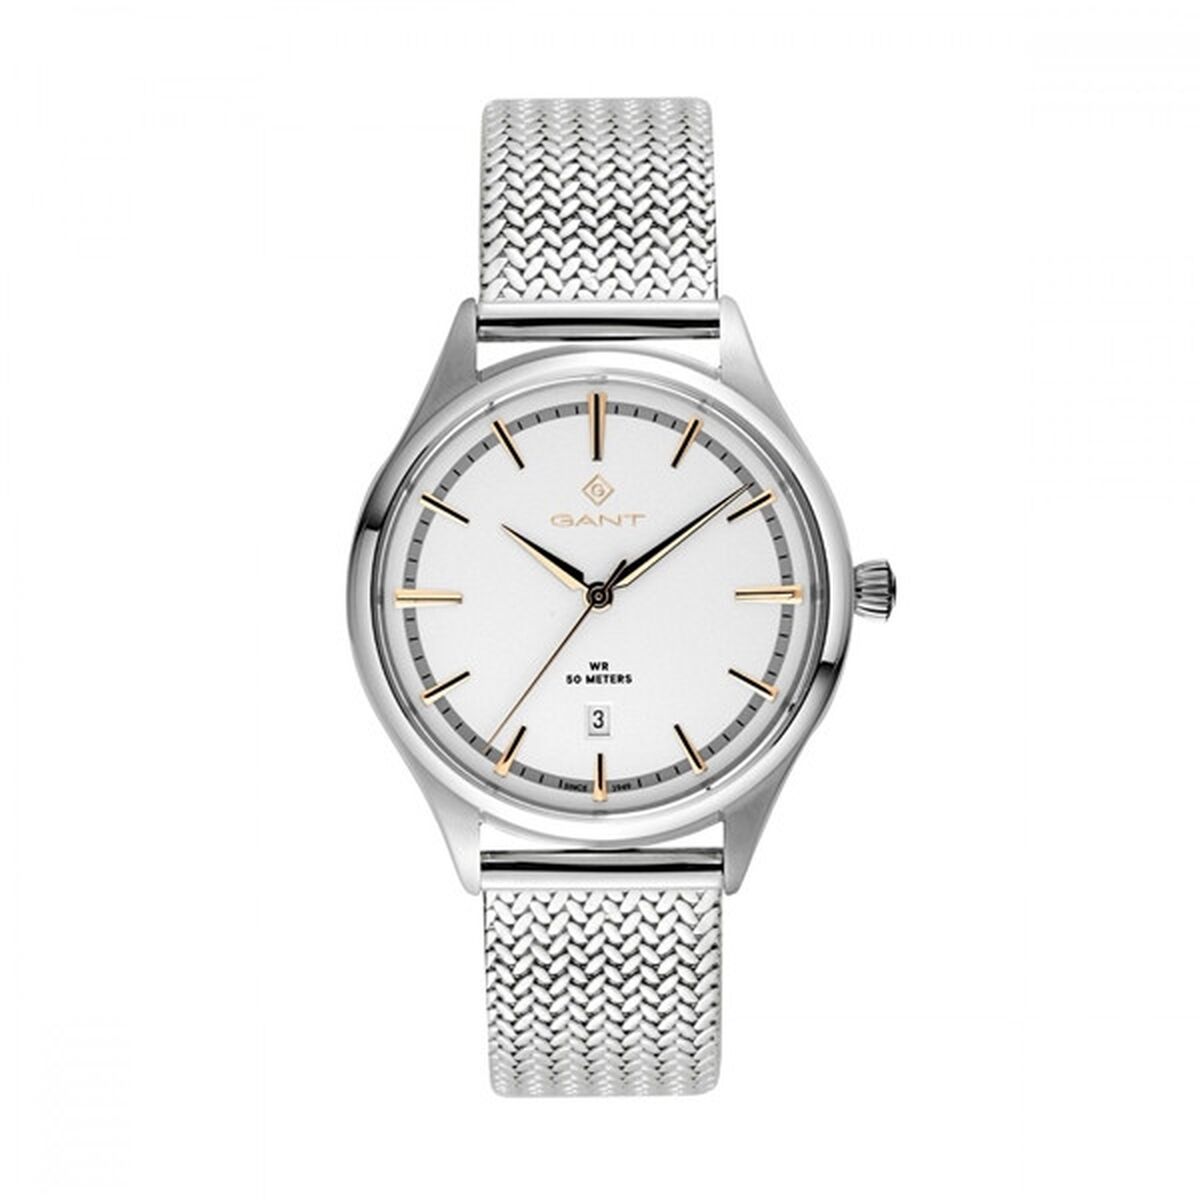 Horloge Dames Gant G157001